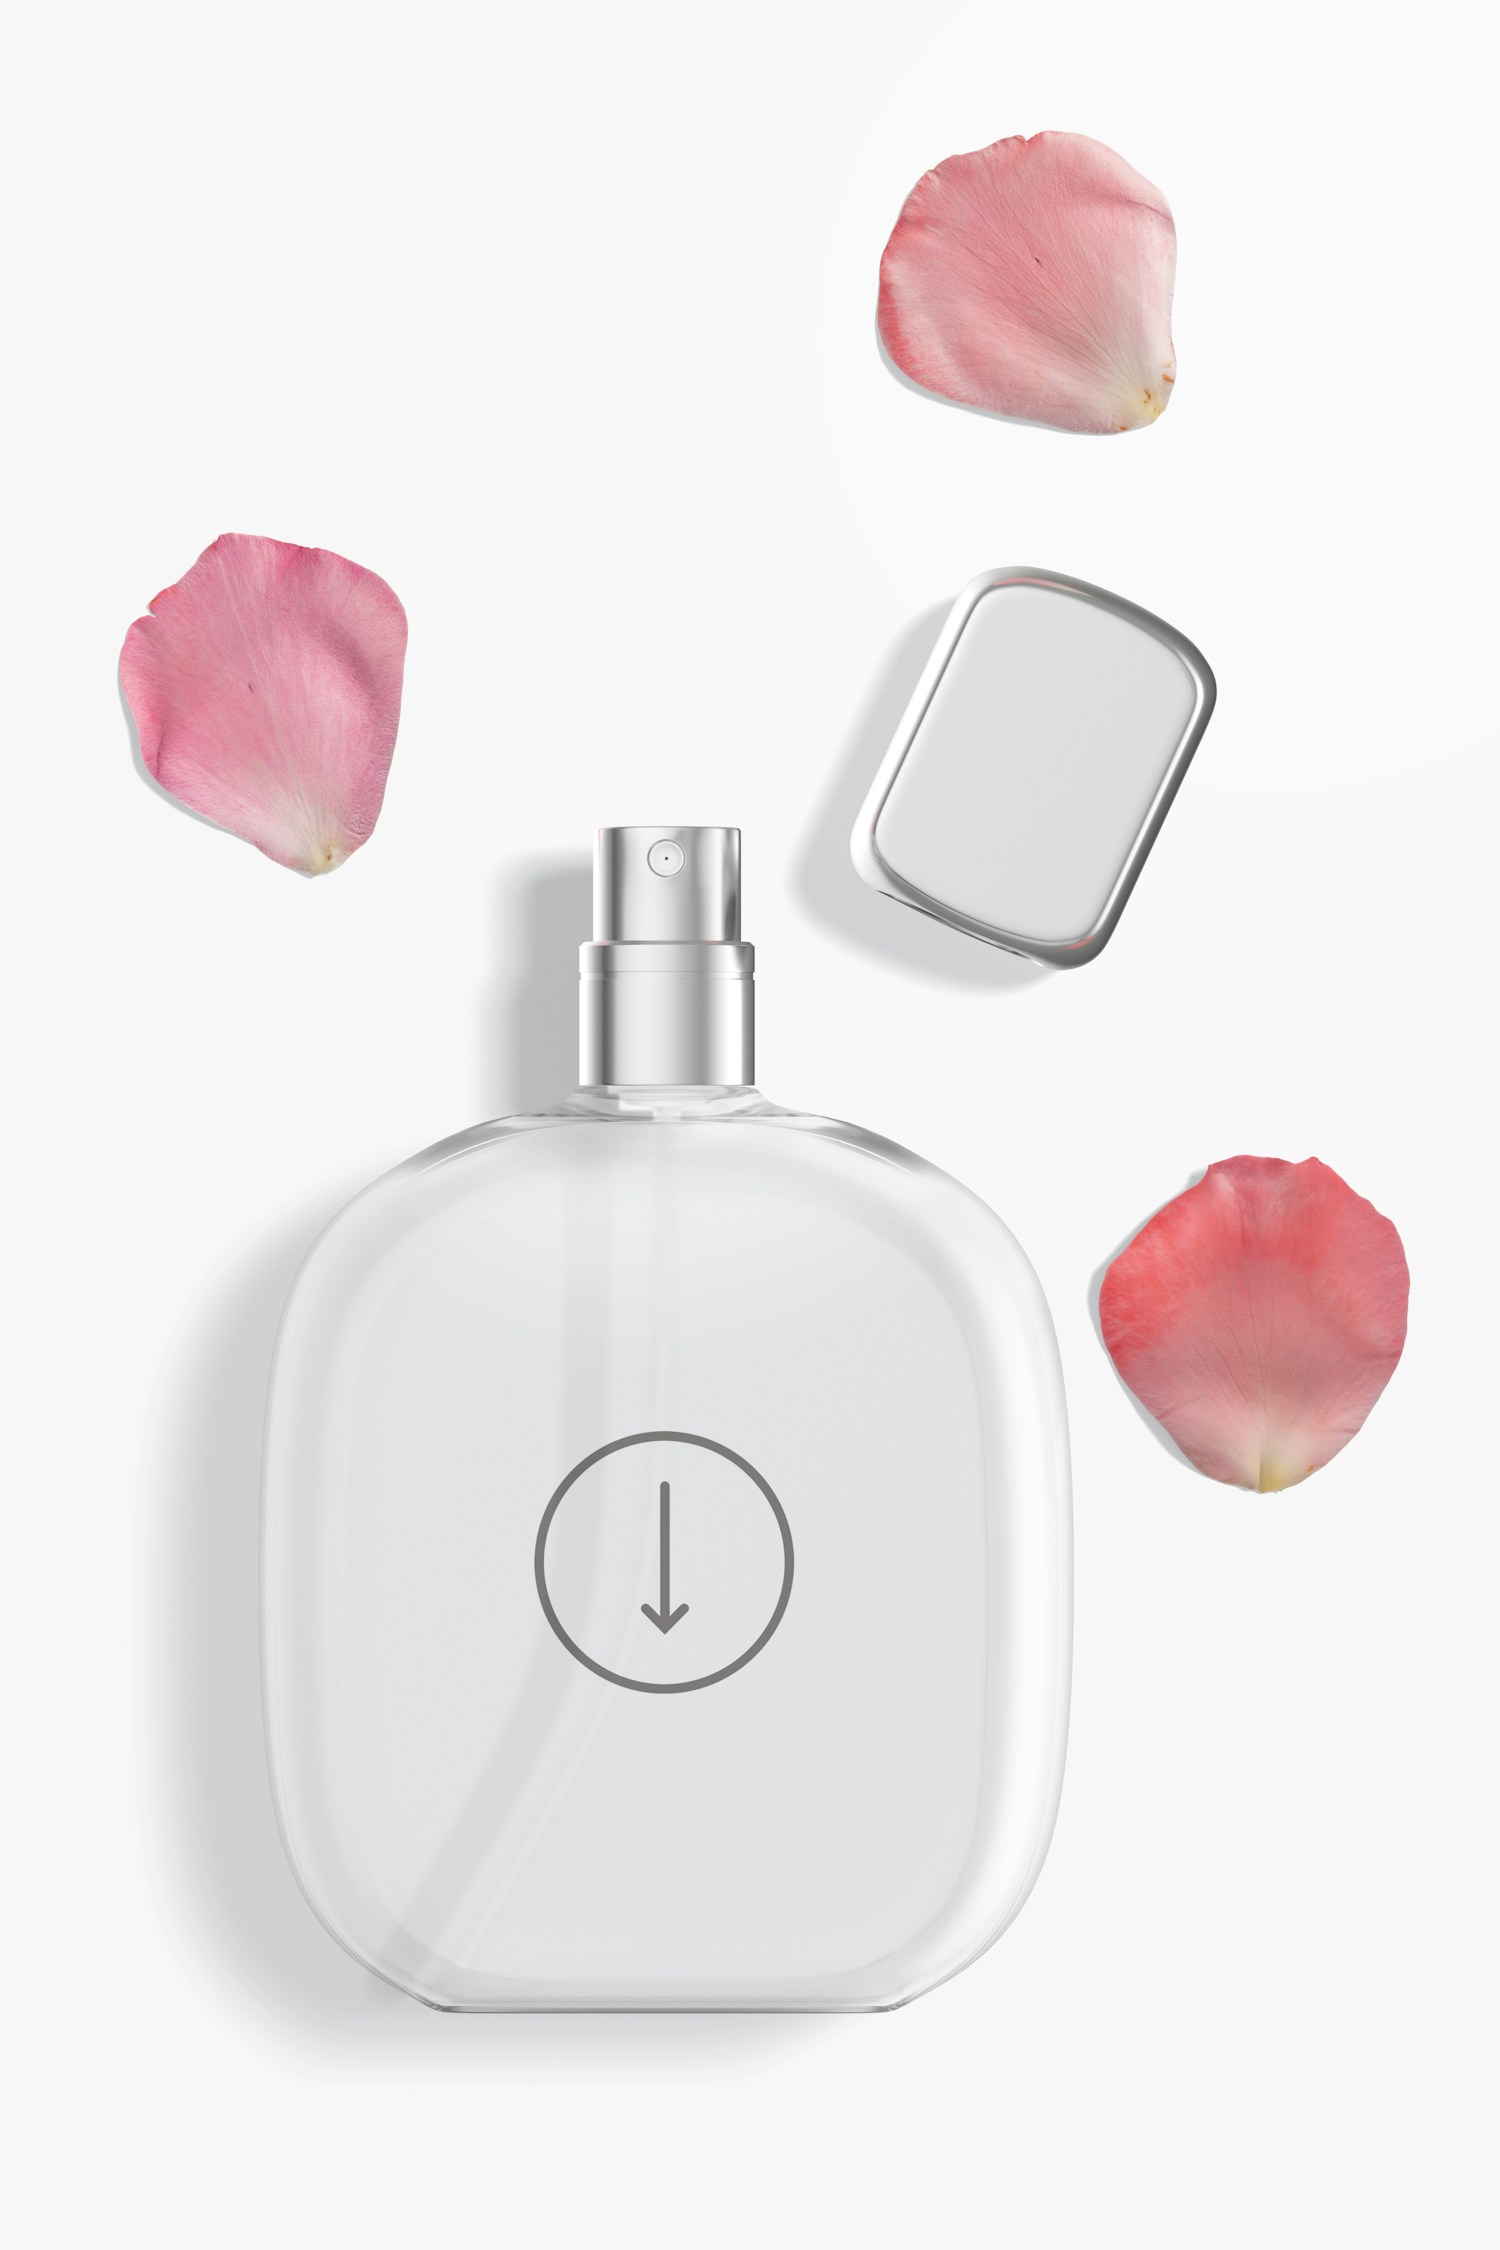 Oval Luxury Perfume Bottle Mockup, Top View